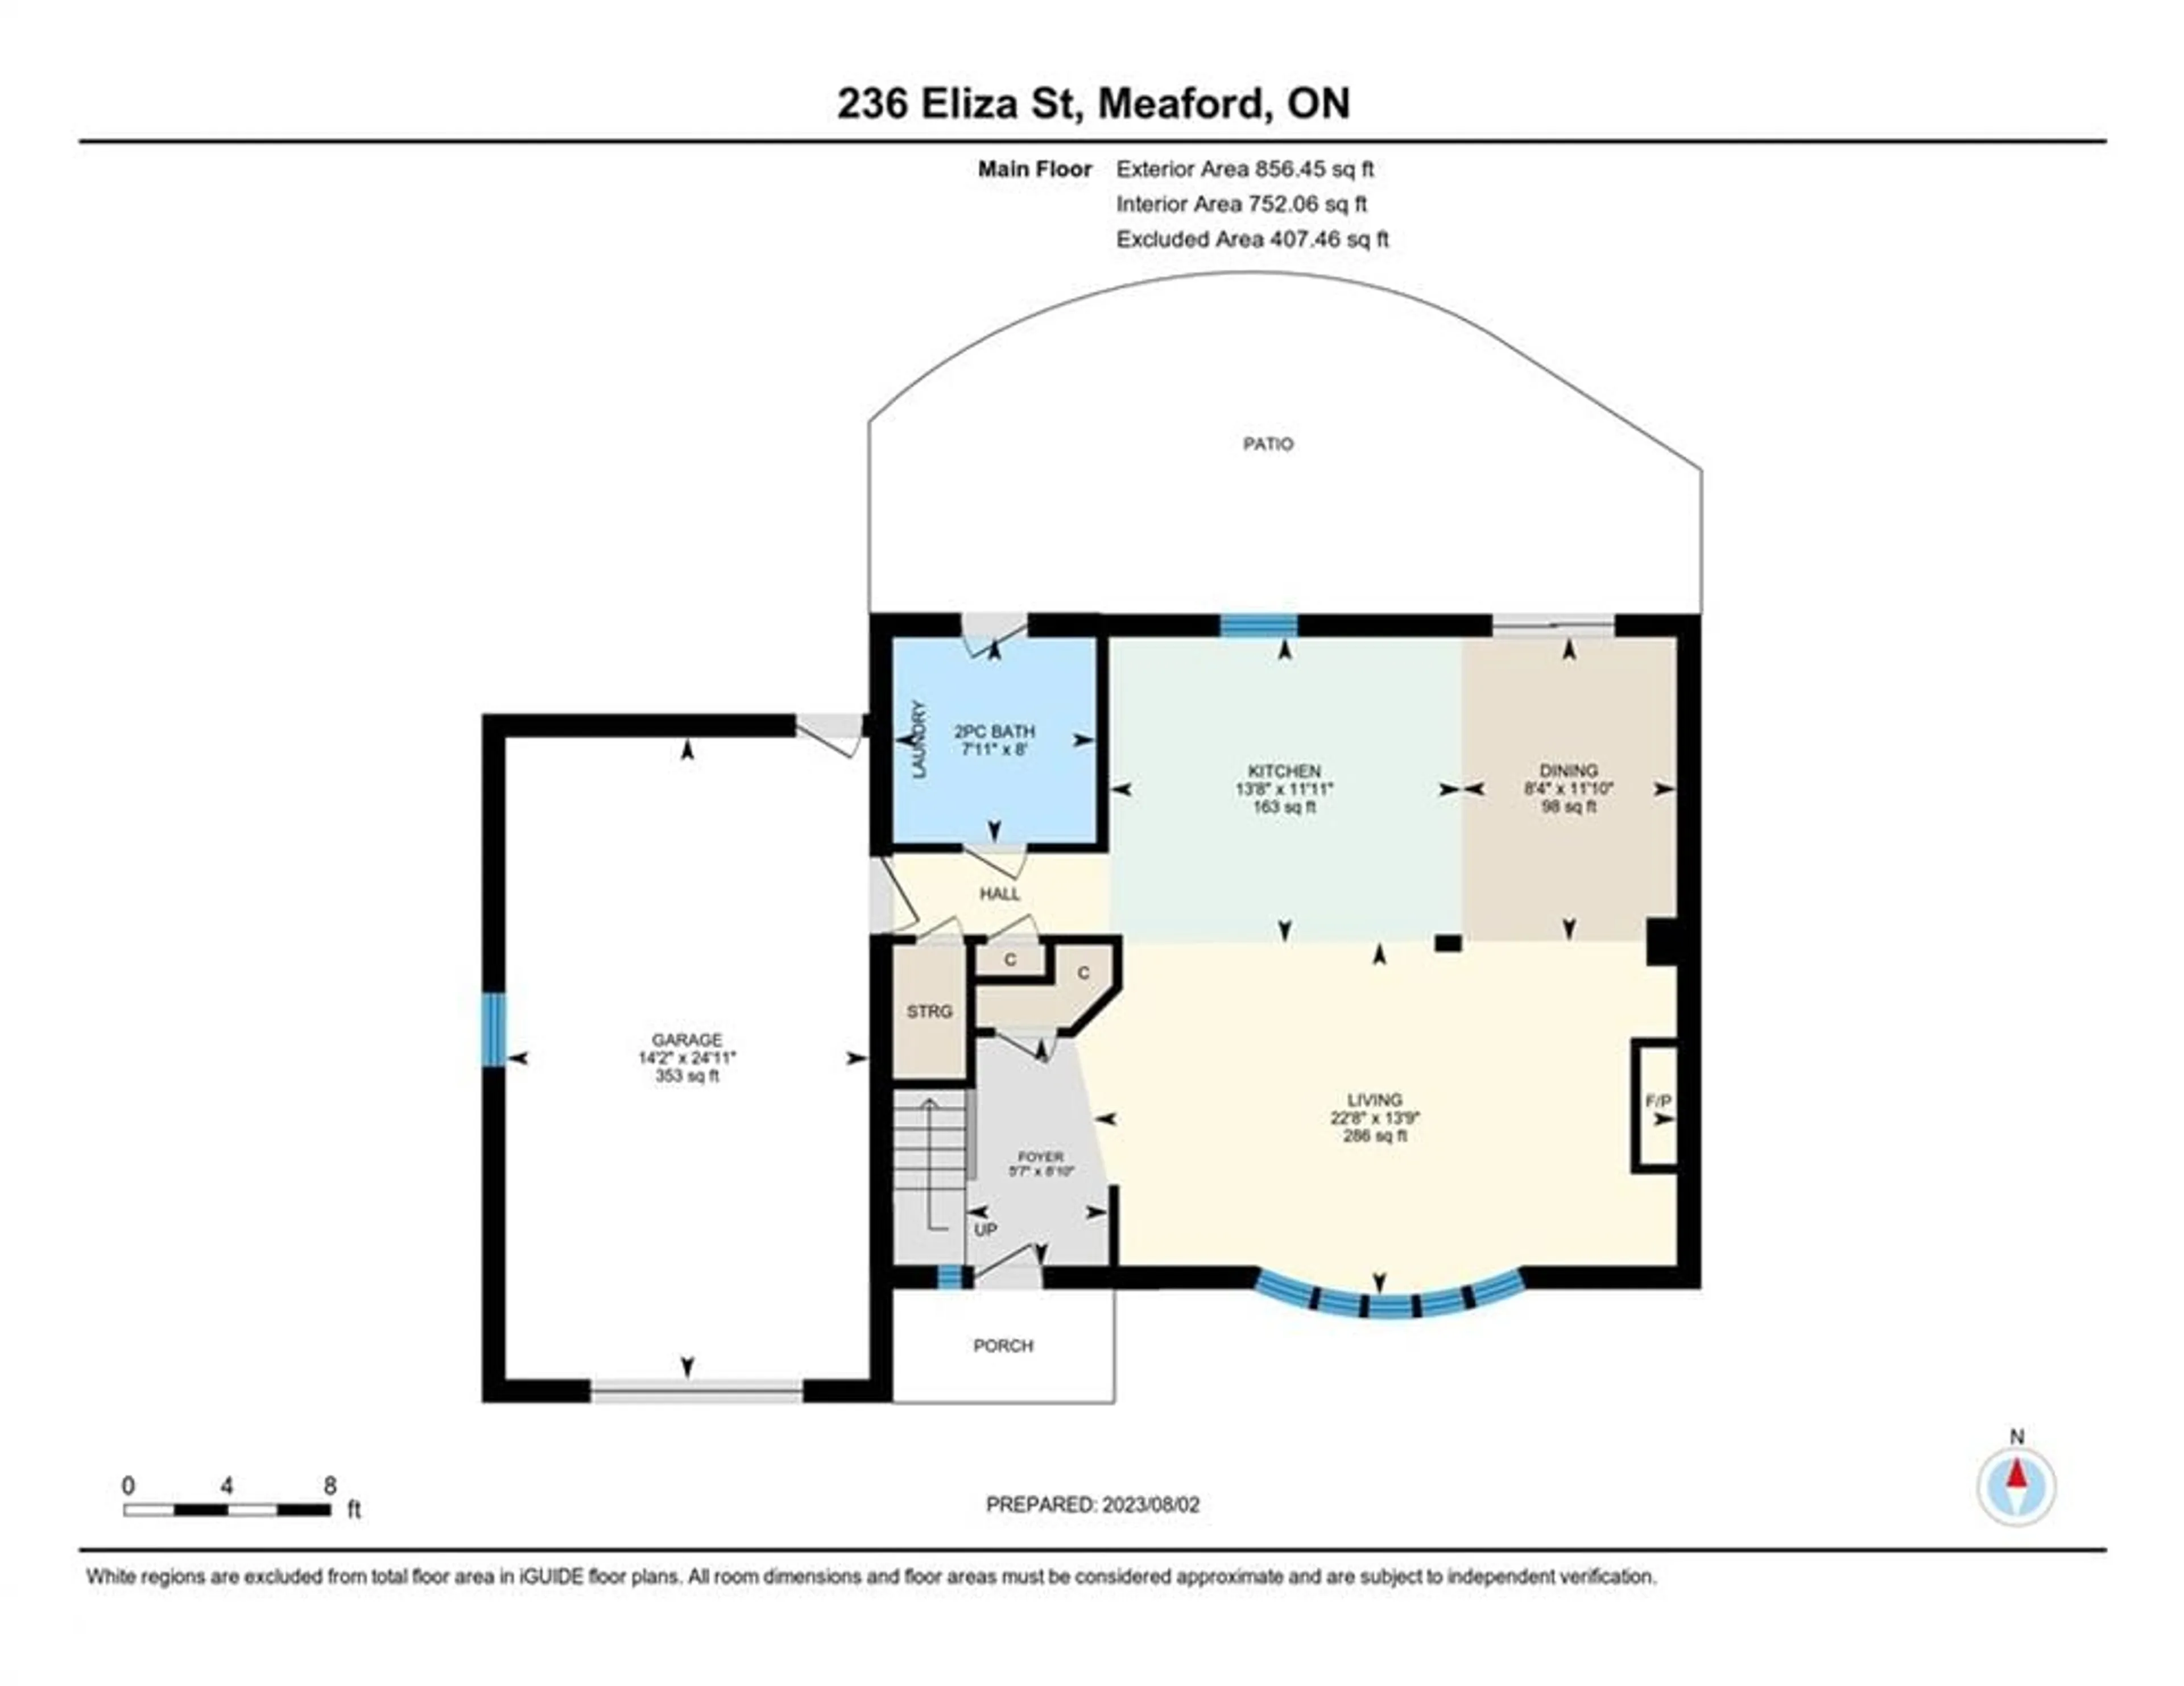 Floor plan for 236 Eliza St, Meaford Ontario N4L 1B4